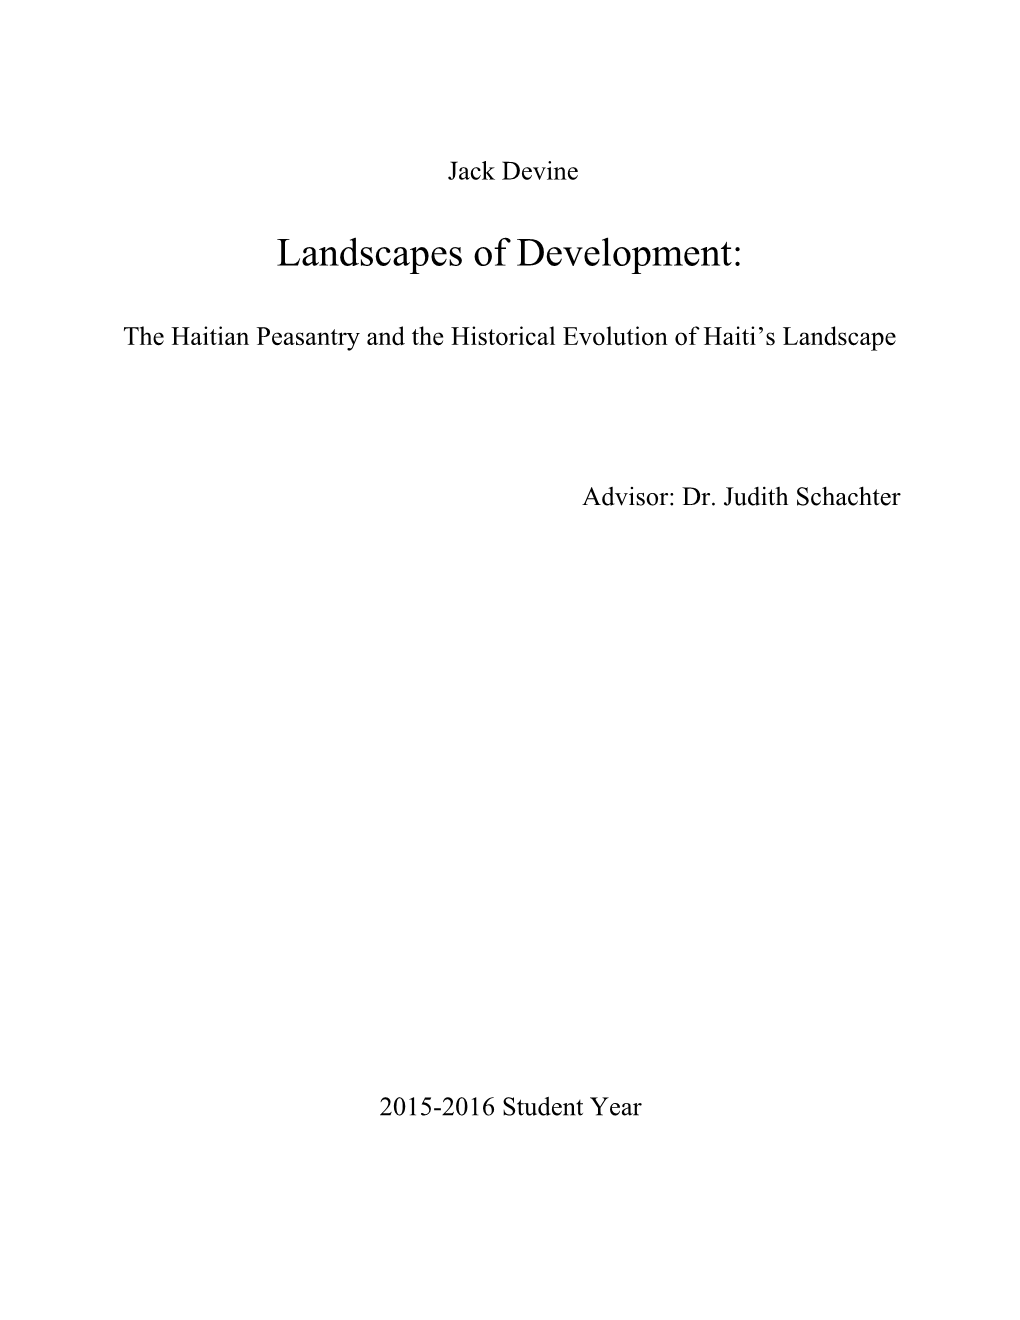 Landscapes of Development